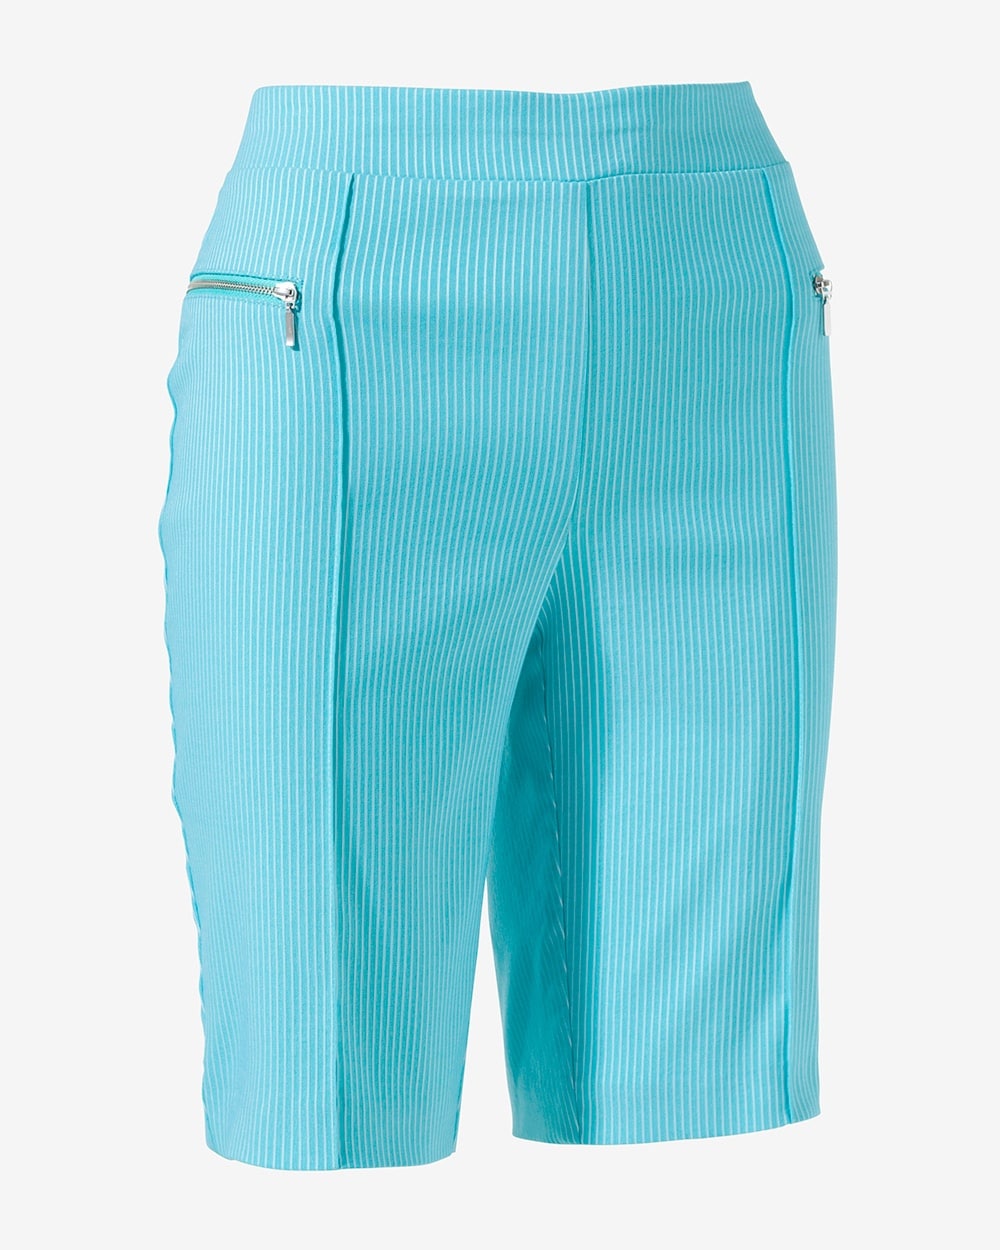 Perfect Yarndye Stripe Shorts- 10 Inch Inseam